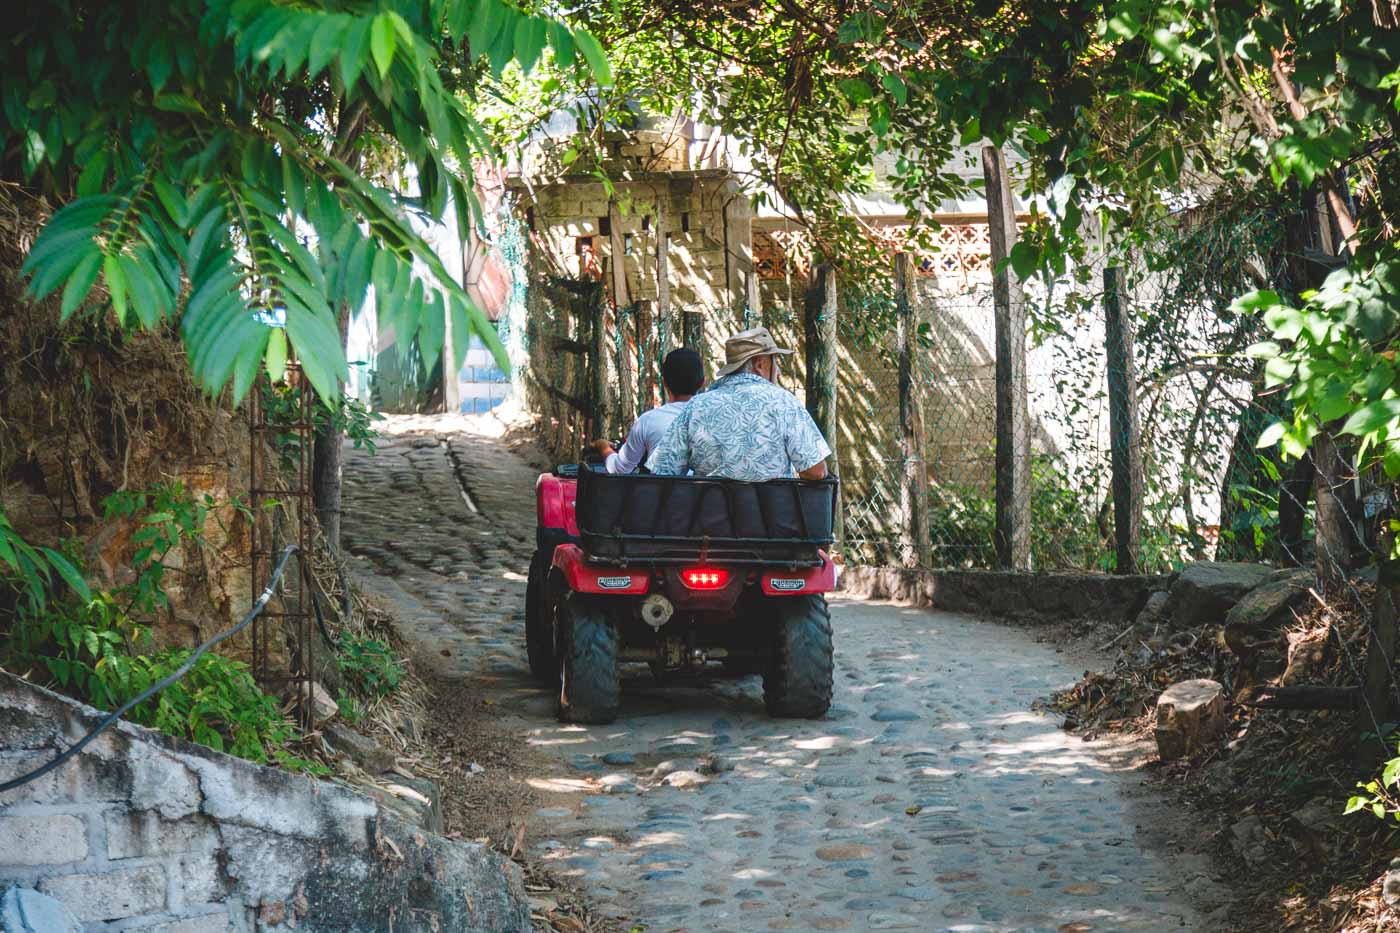 An elderly tourist being driven around on an ATV in Yelapa.